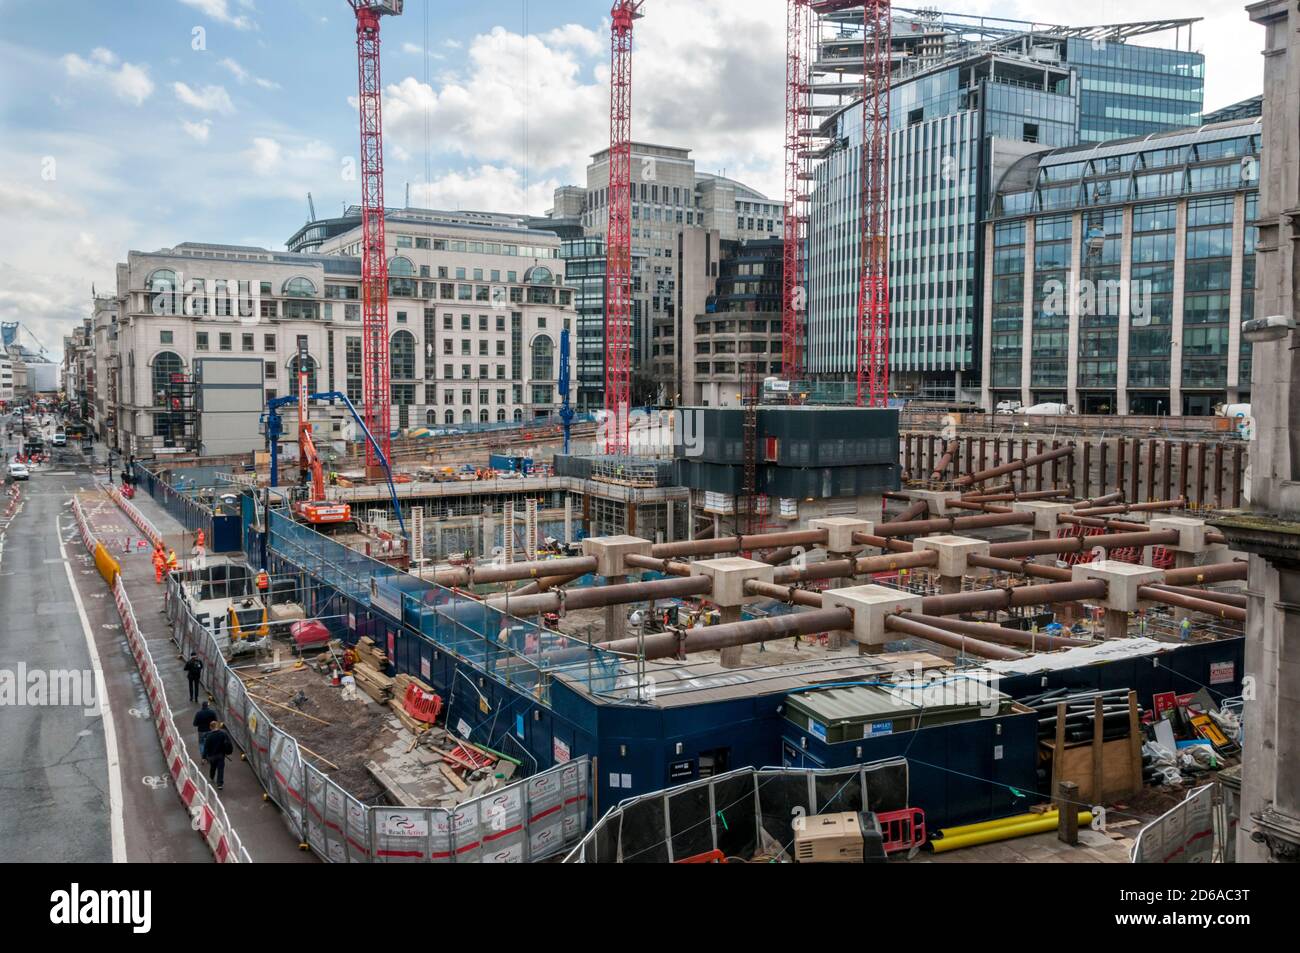 2016 development site of new Goldman Sachs HQ at Plumtree Court, Shoe Lane off Farringdon Street, London. Stock Photo